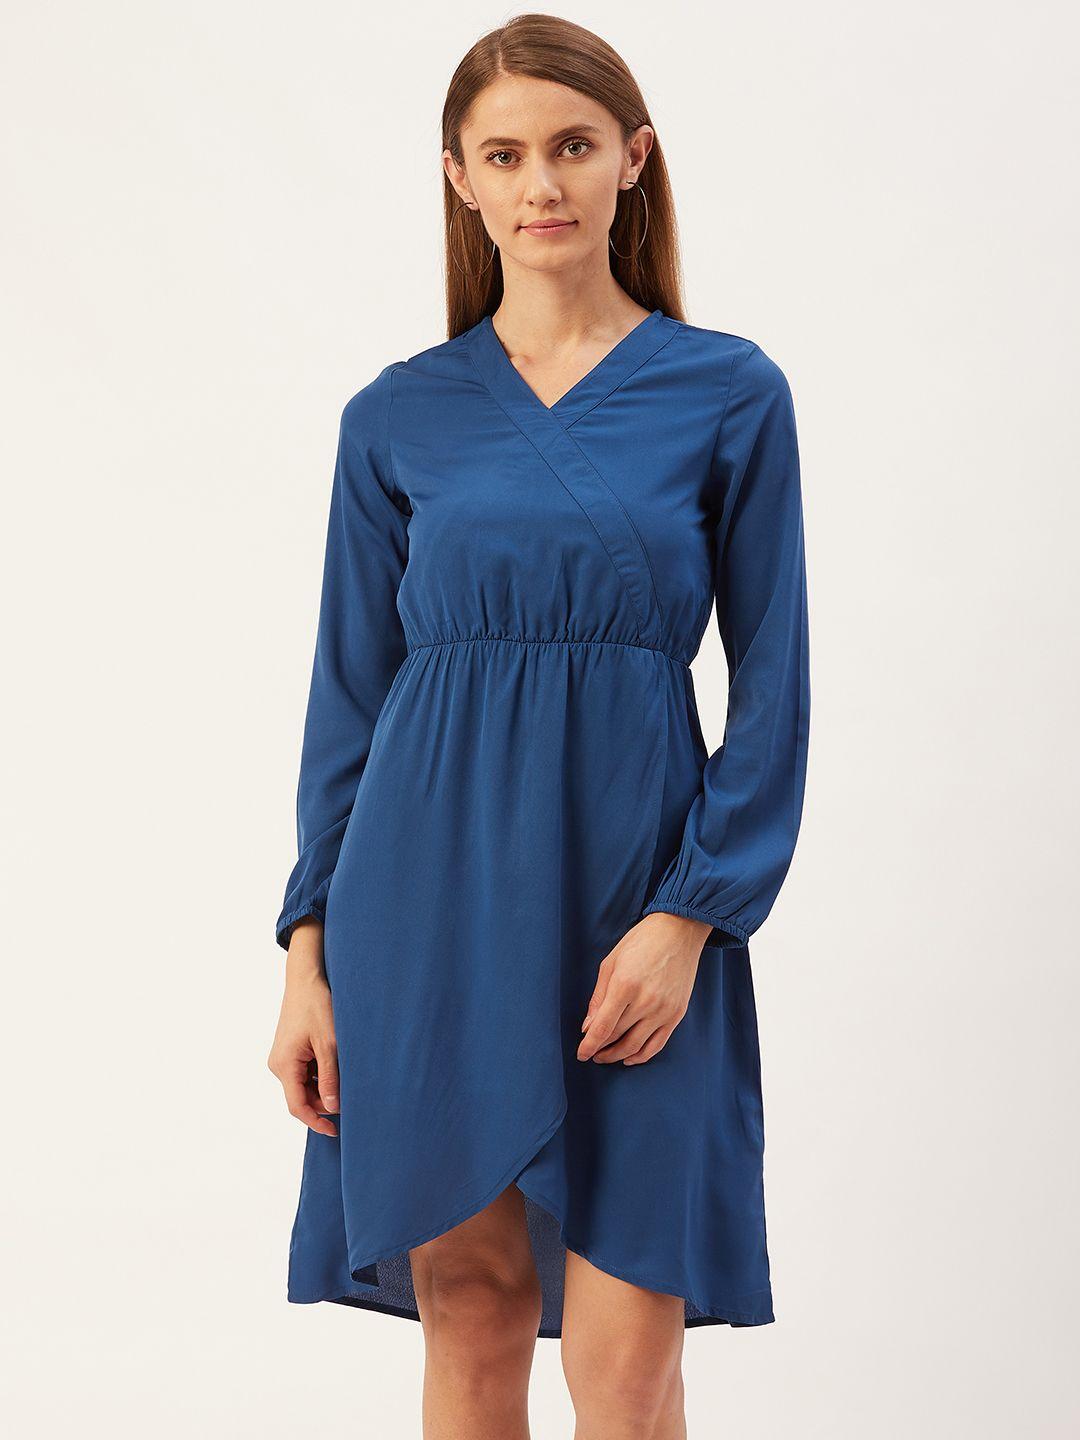 magnetic designs blue a-line dress with tulip hem